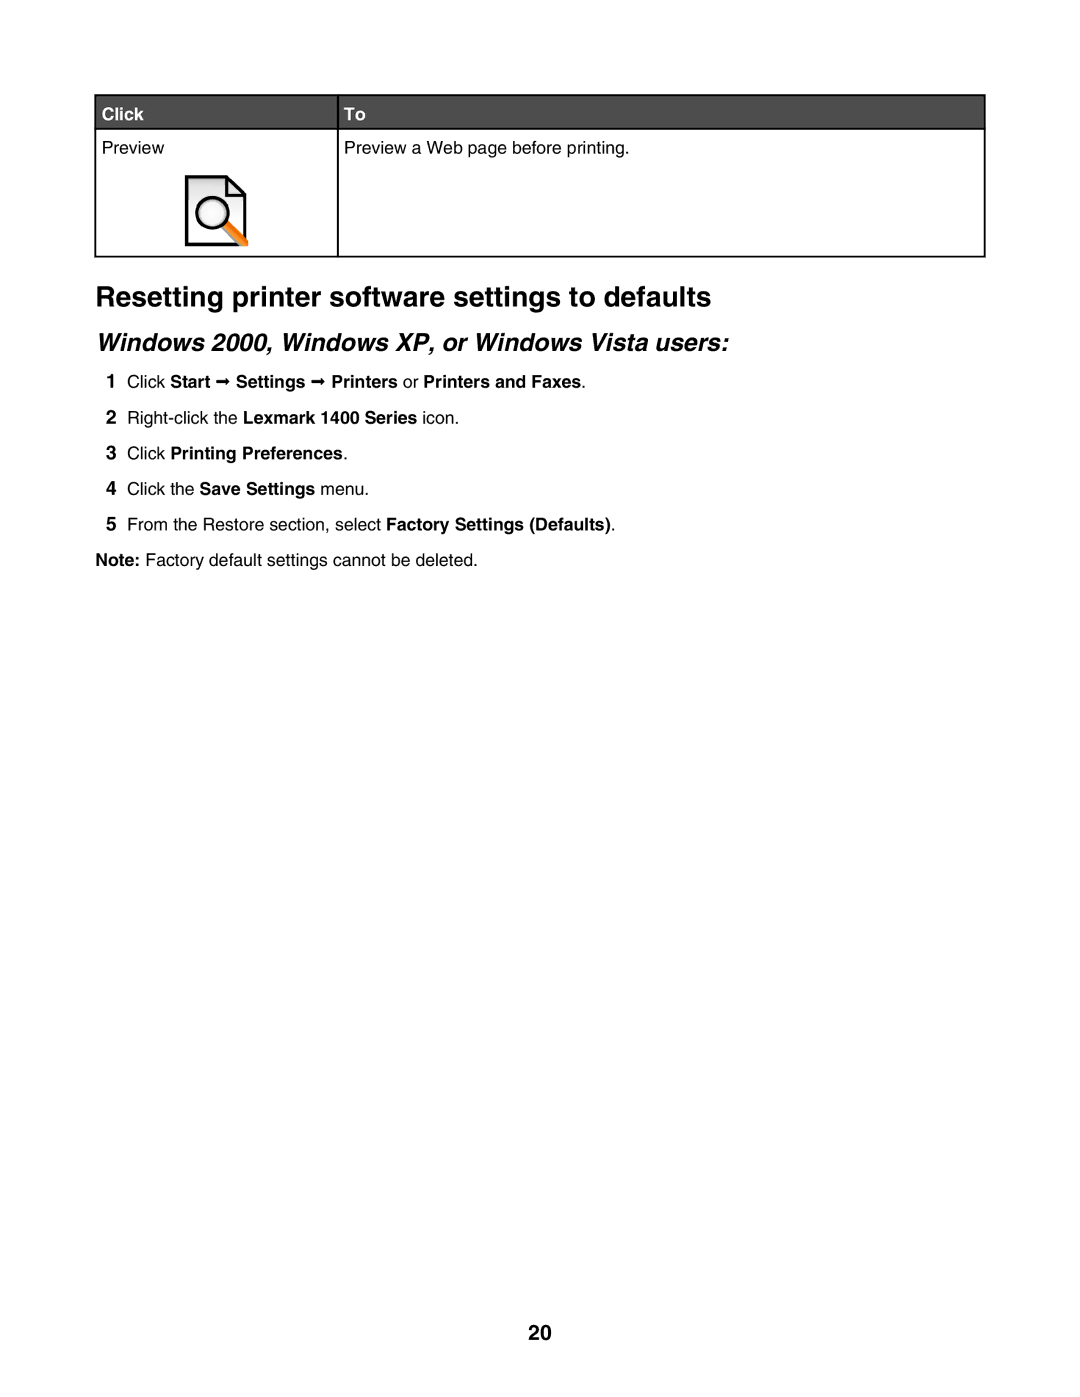 Lexmark 1400 Series Resetting printer software settings to defaults, Windows 2000, Windows XP, or Windows Vista users 